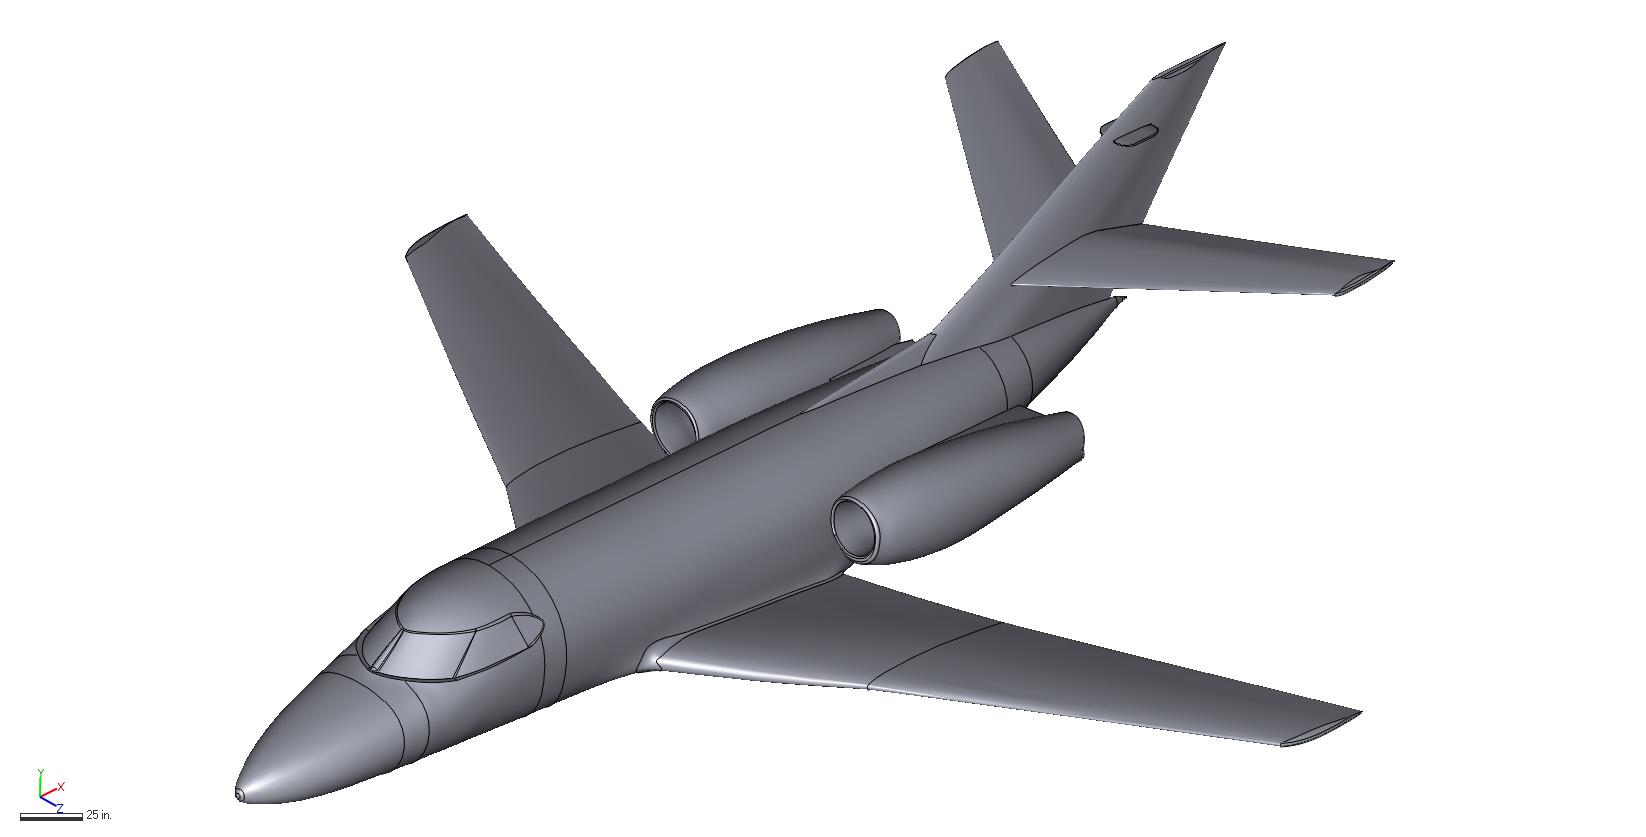 3D Scanning & Reverse Engineering an Aircraft